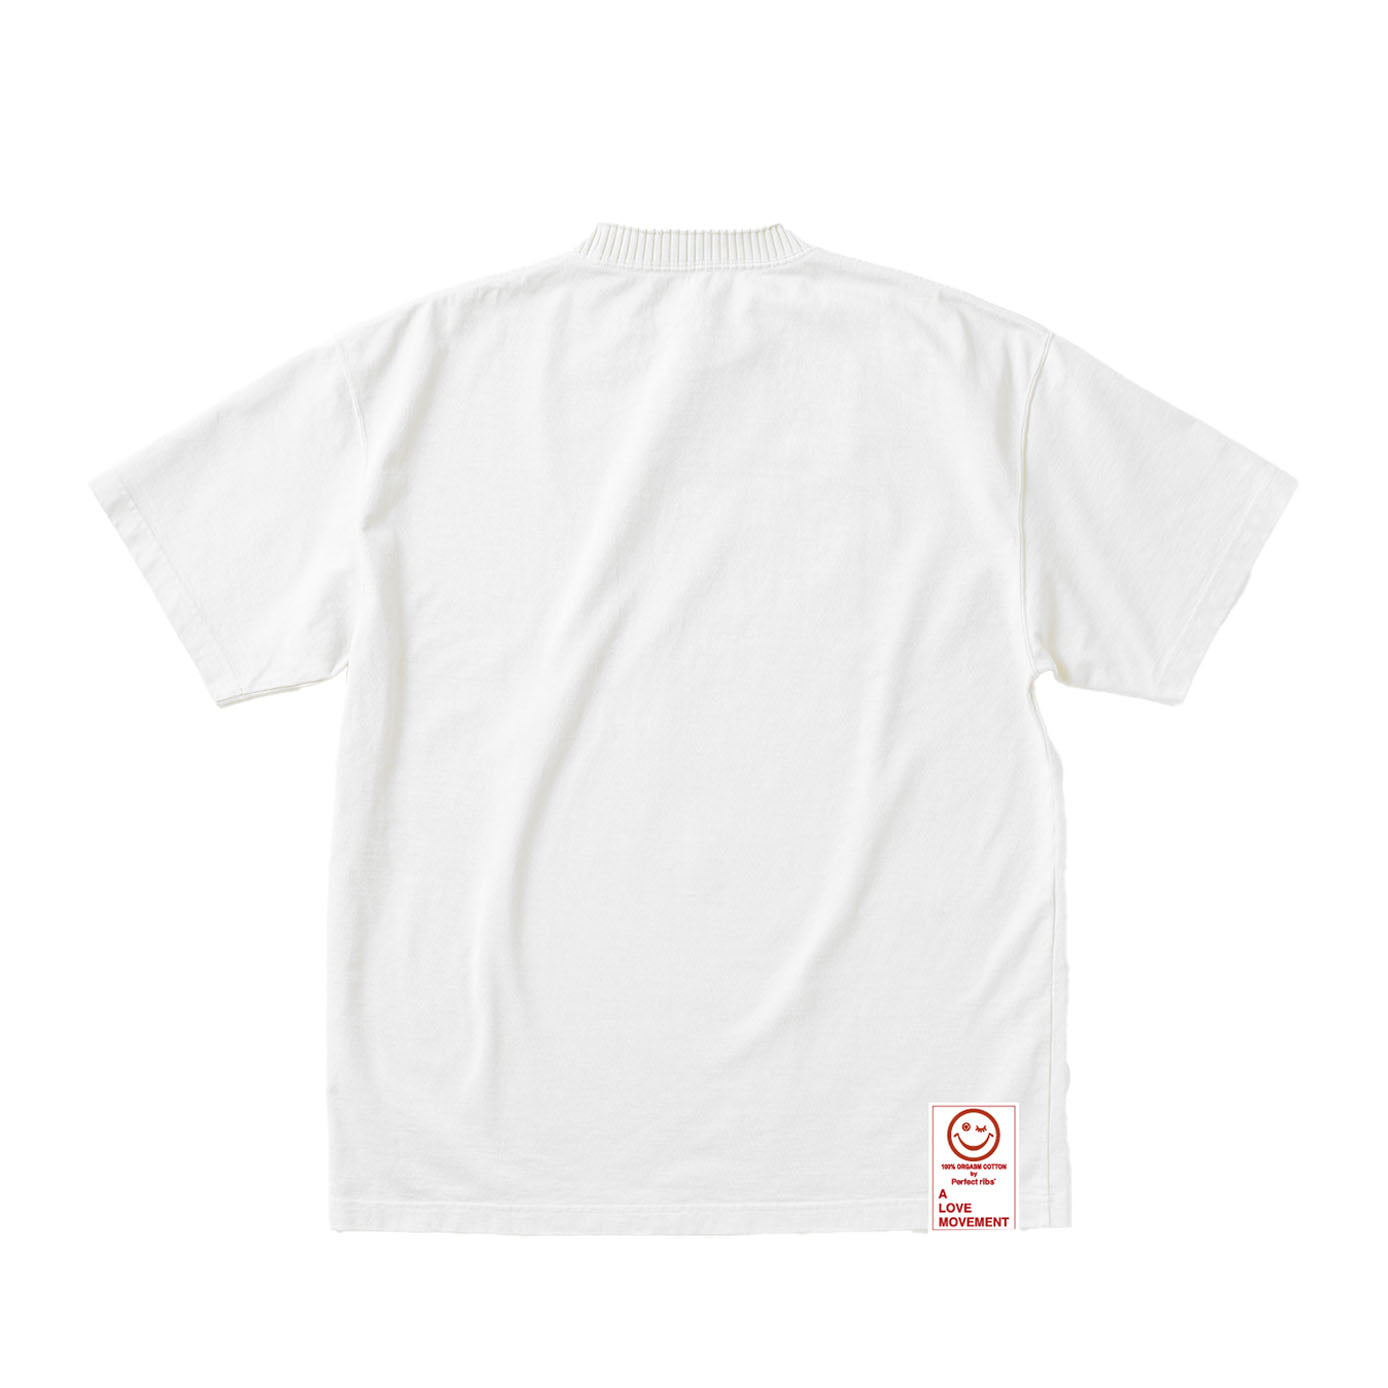 【Perfect ribs®︎×A LOVE MOVEMENT】"California Dreaming"Basic Short Sleeve T Shirts / White (ベーシック ショートスリーブ ティーシャツ/ホワイト)